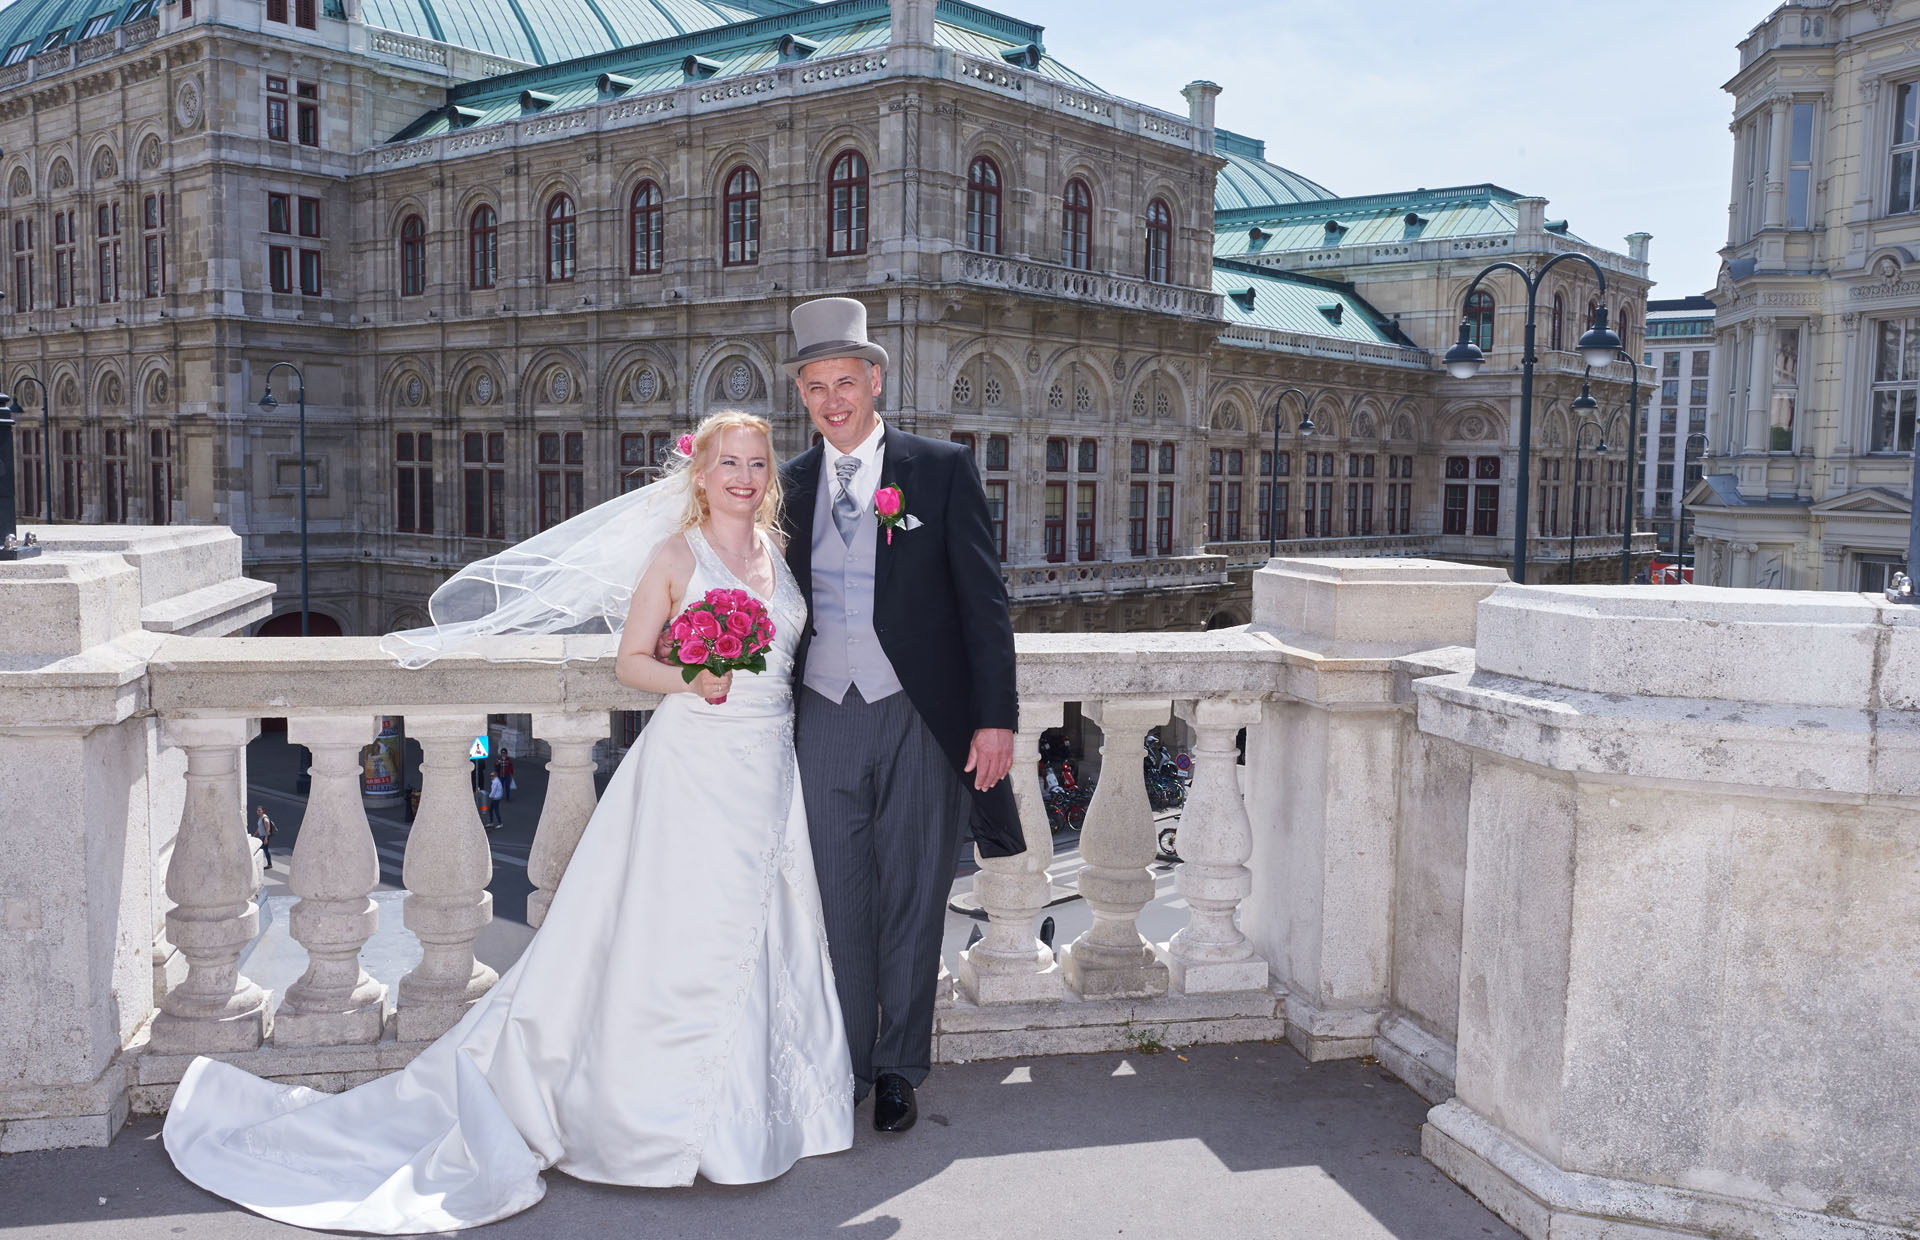 Hochzeitsfotograf Wien | Harald C. Sahling 0.17557100 1696374198